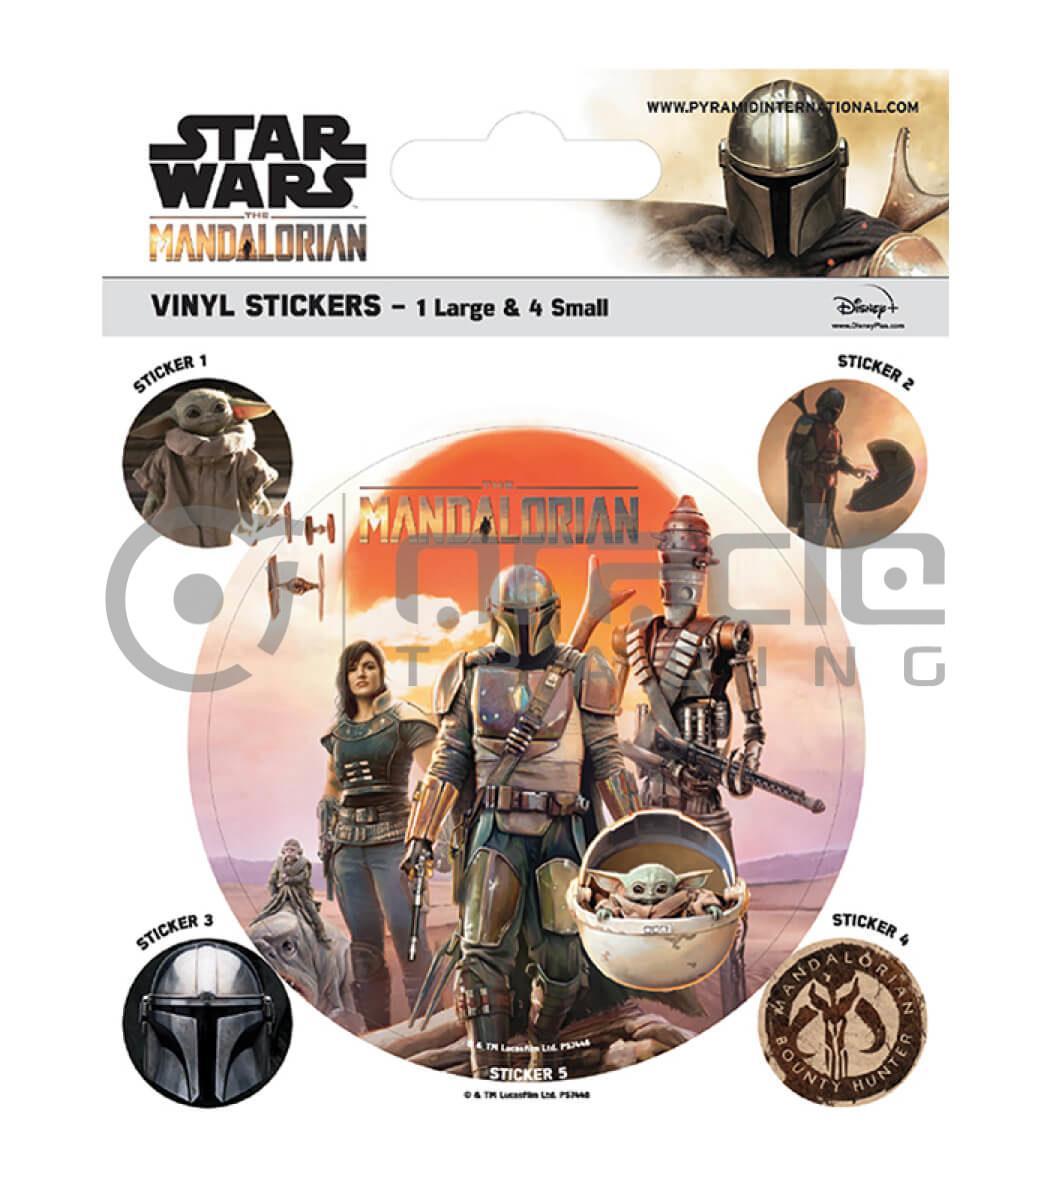 Star Wars: The Mandalorian Vinyl Sticker Pack - Cast